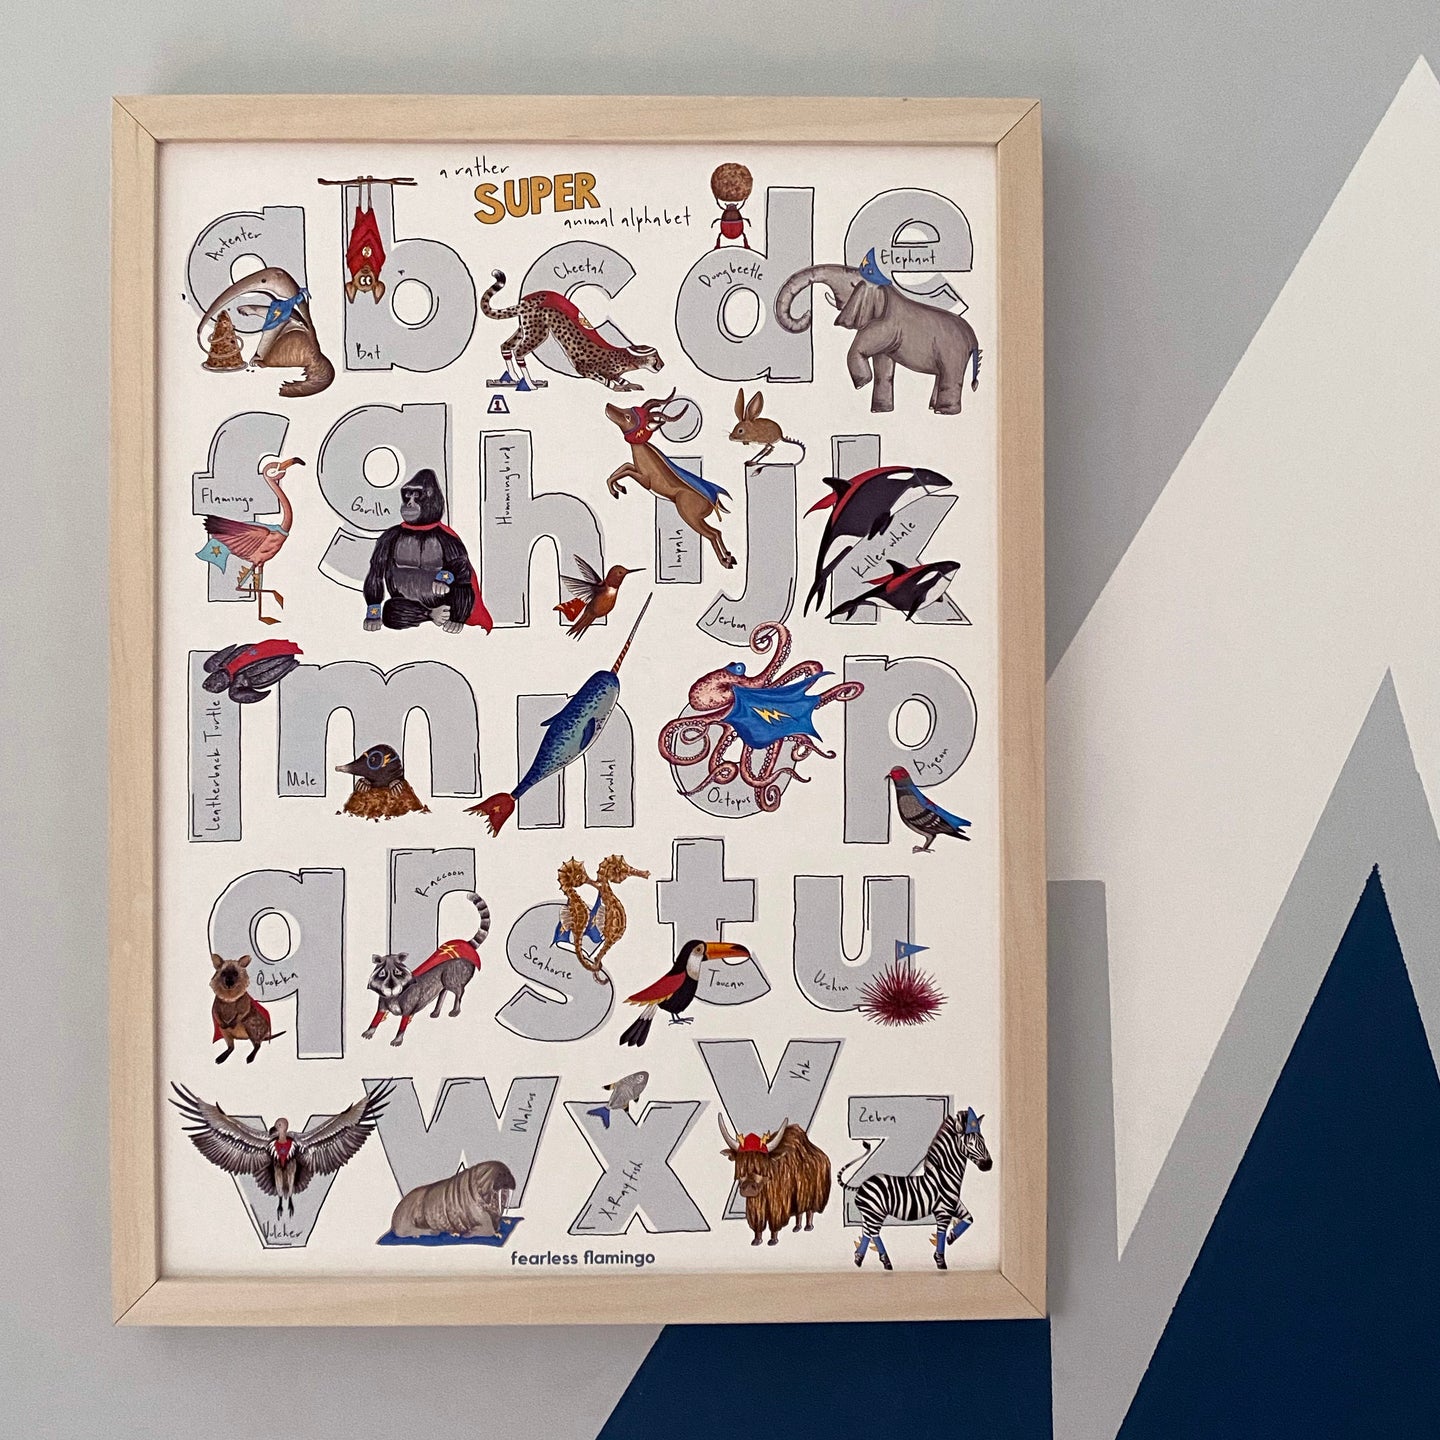 A rather Super animal alphabet print!